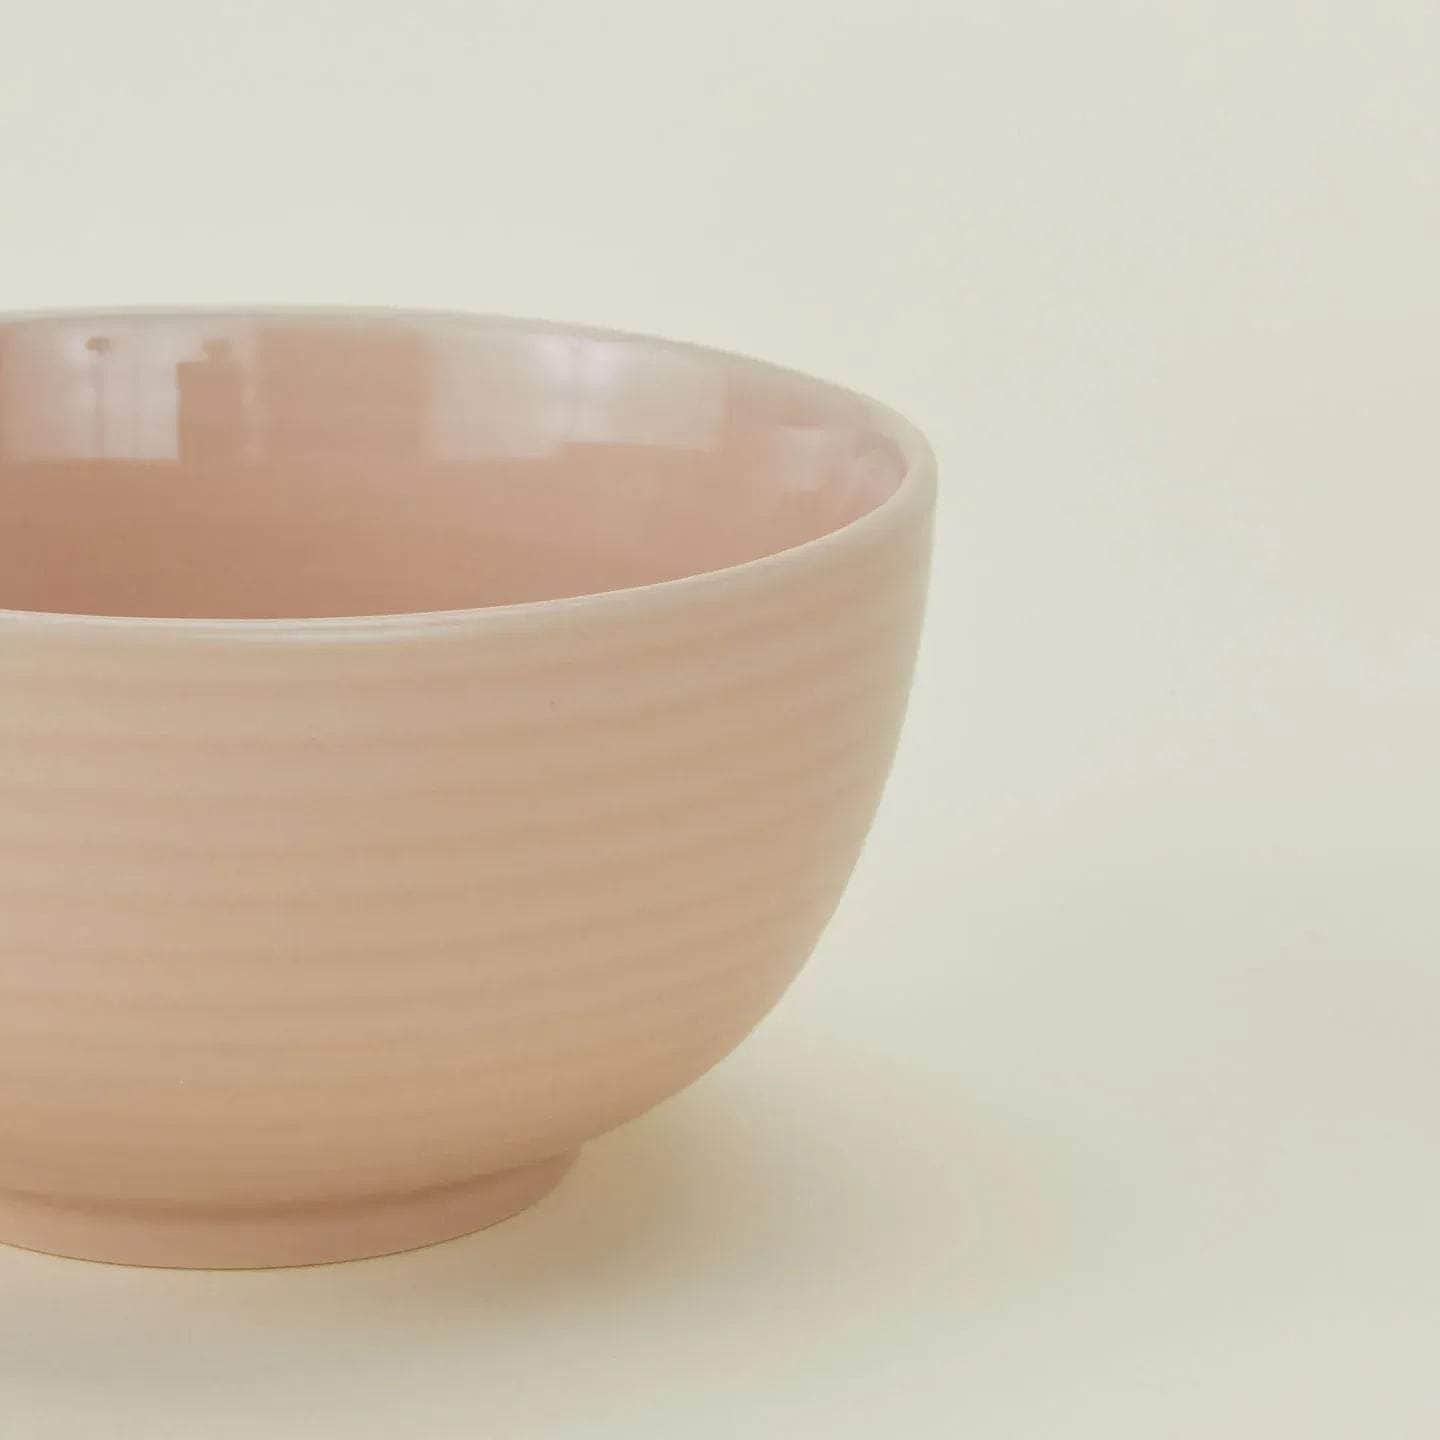 Essential Large Bowl - Set Of 4, Blush